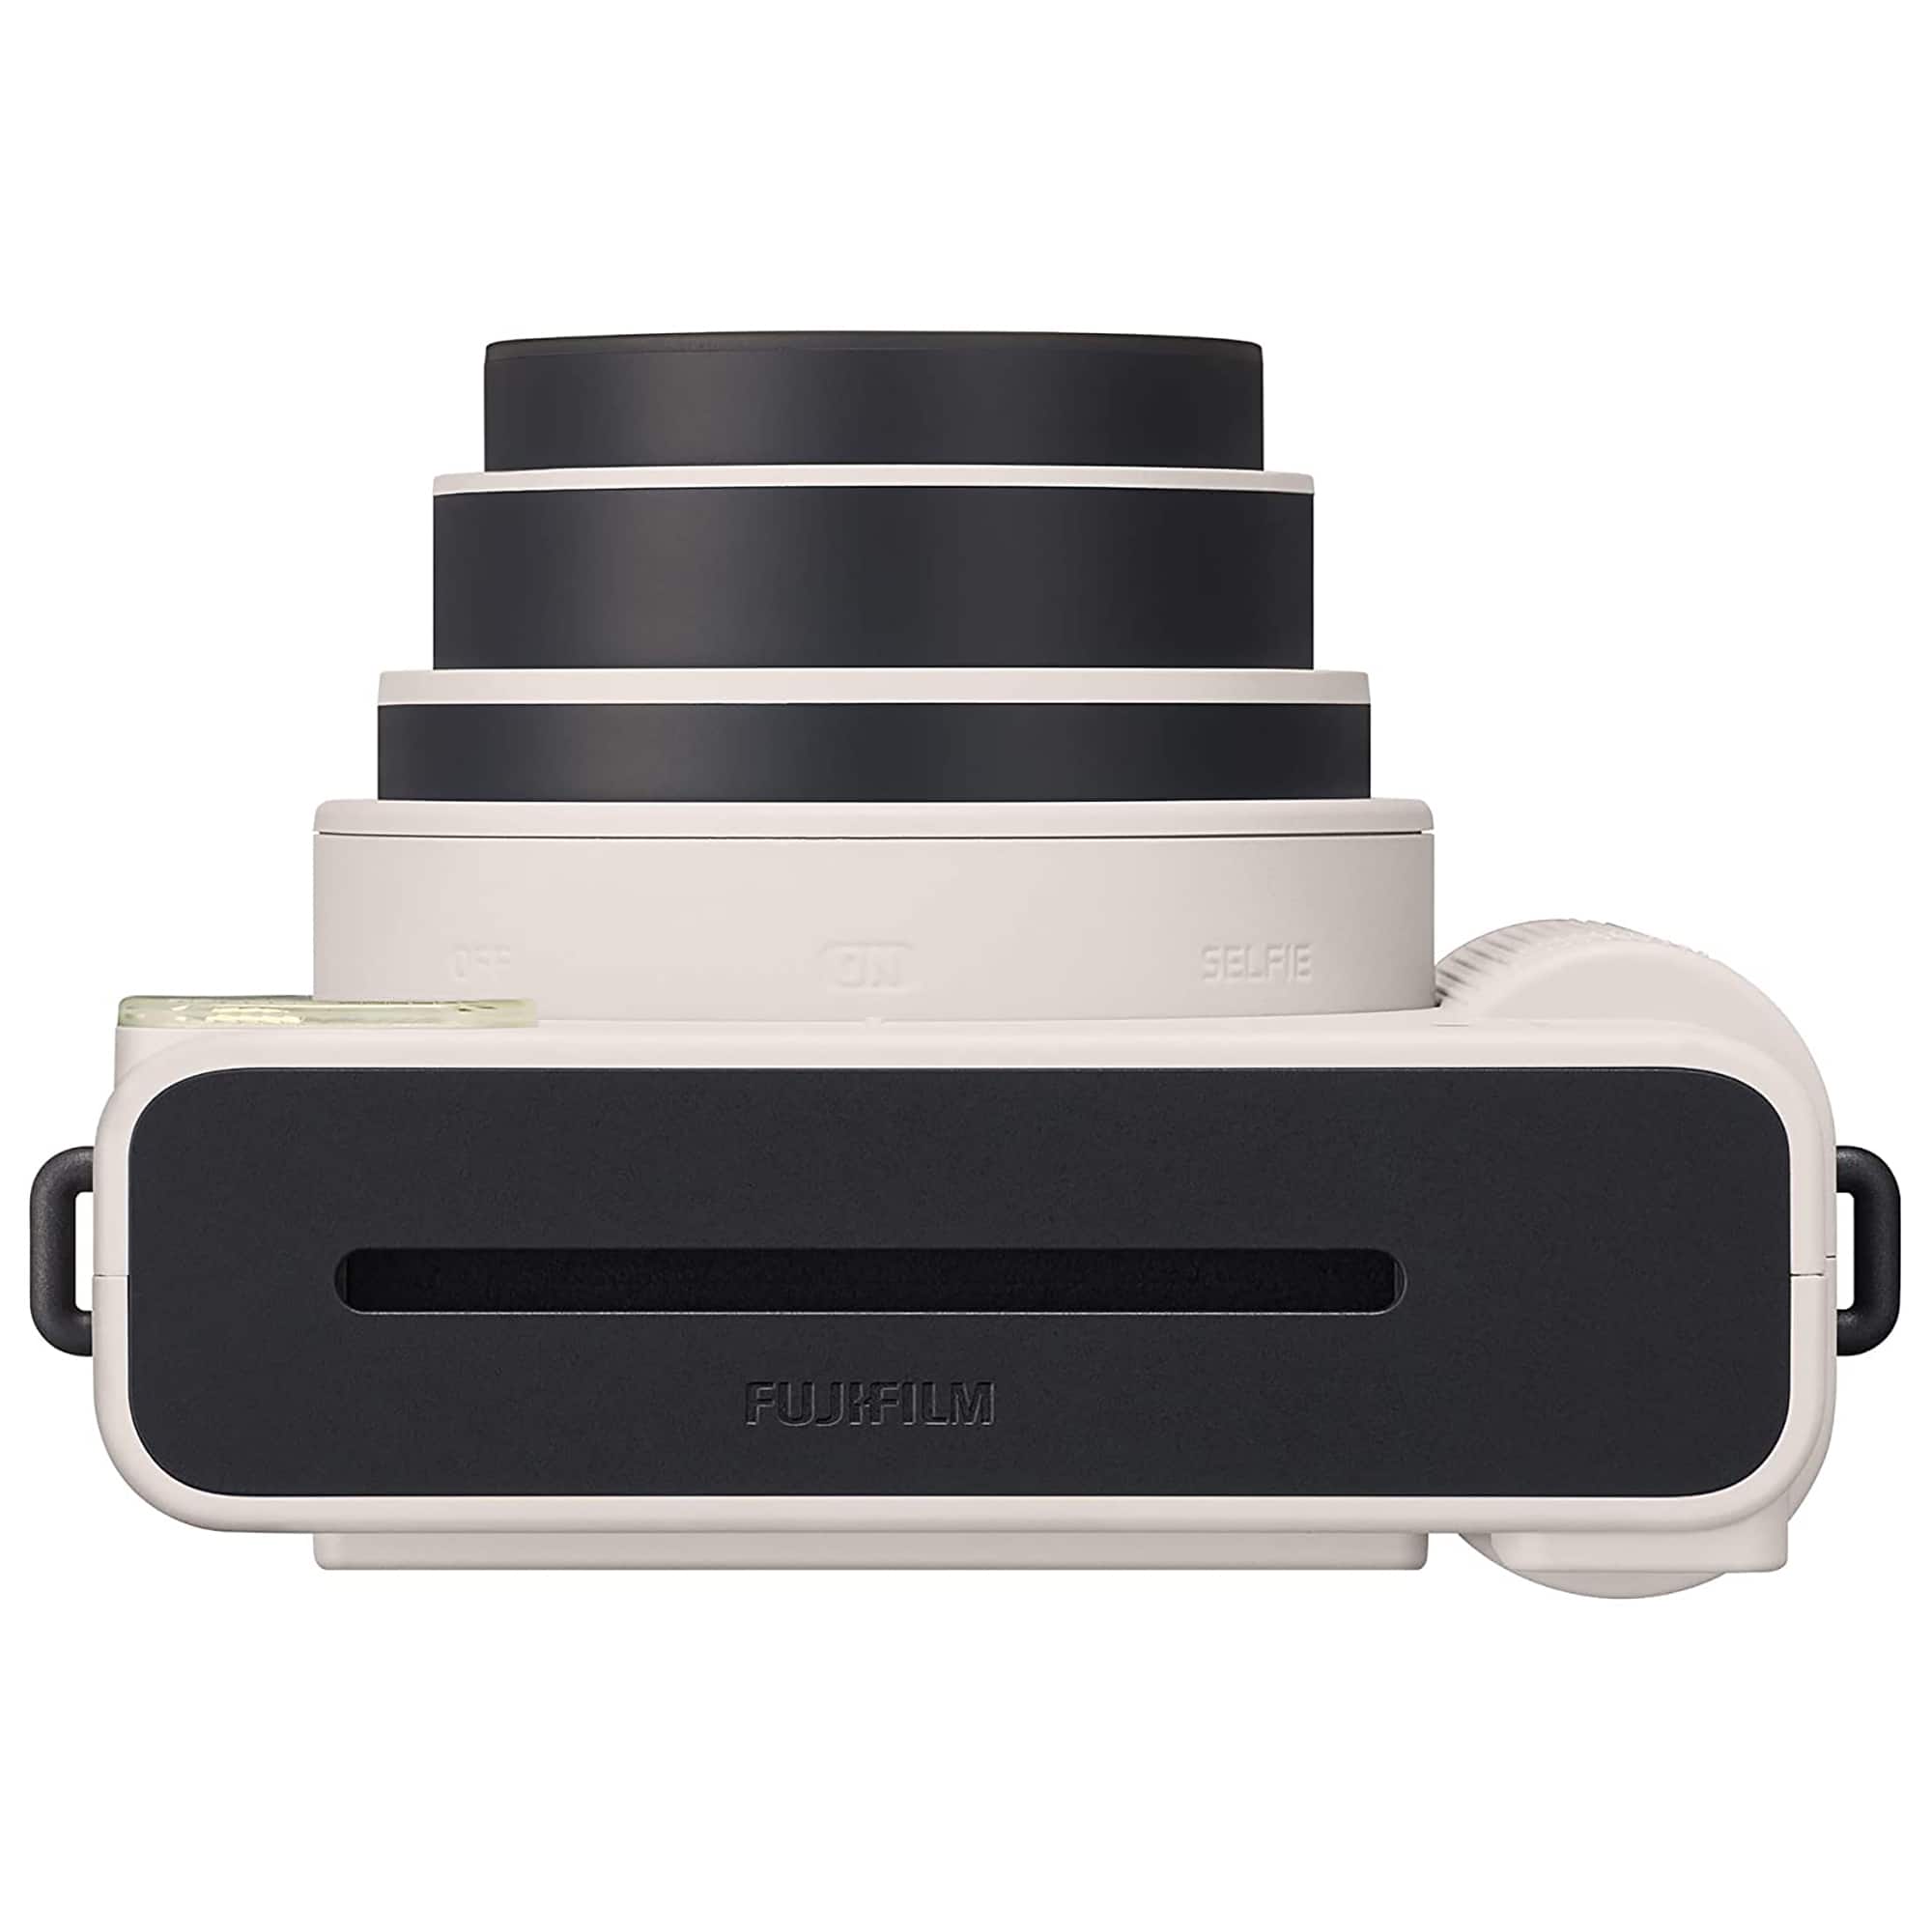 Instax Square SQ1 White Instant Camera